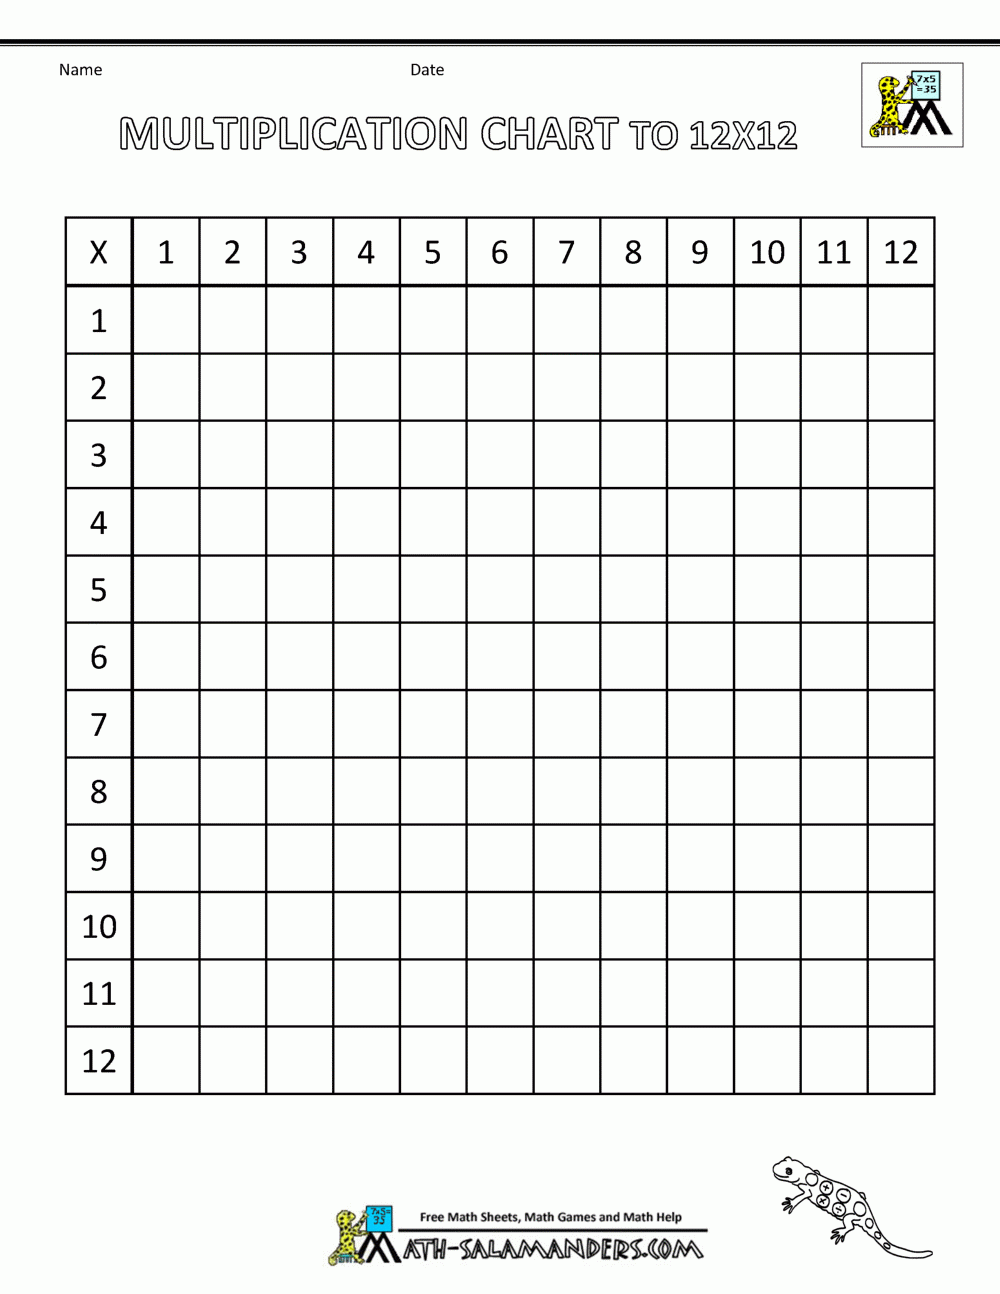 blank multiplication chart